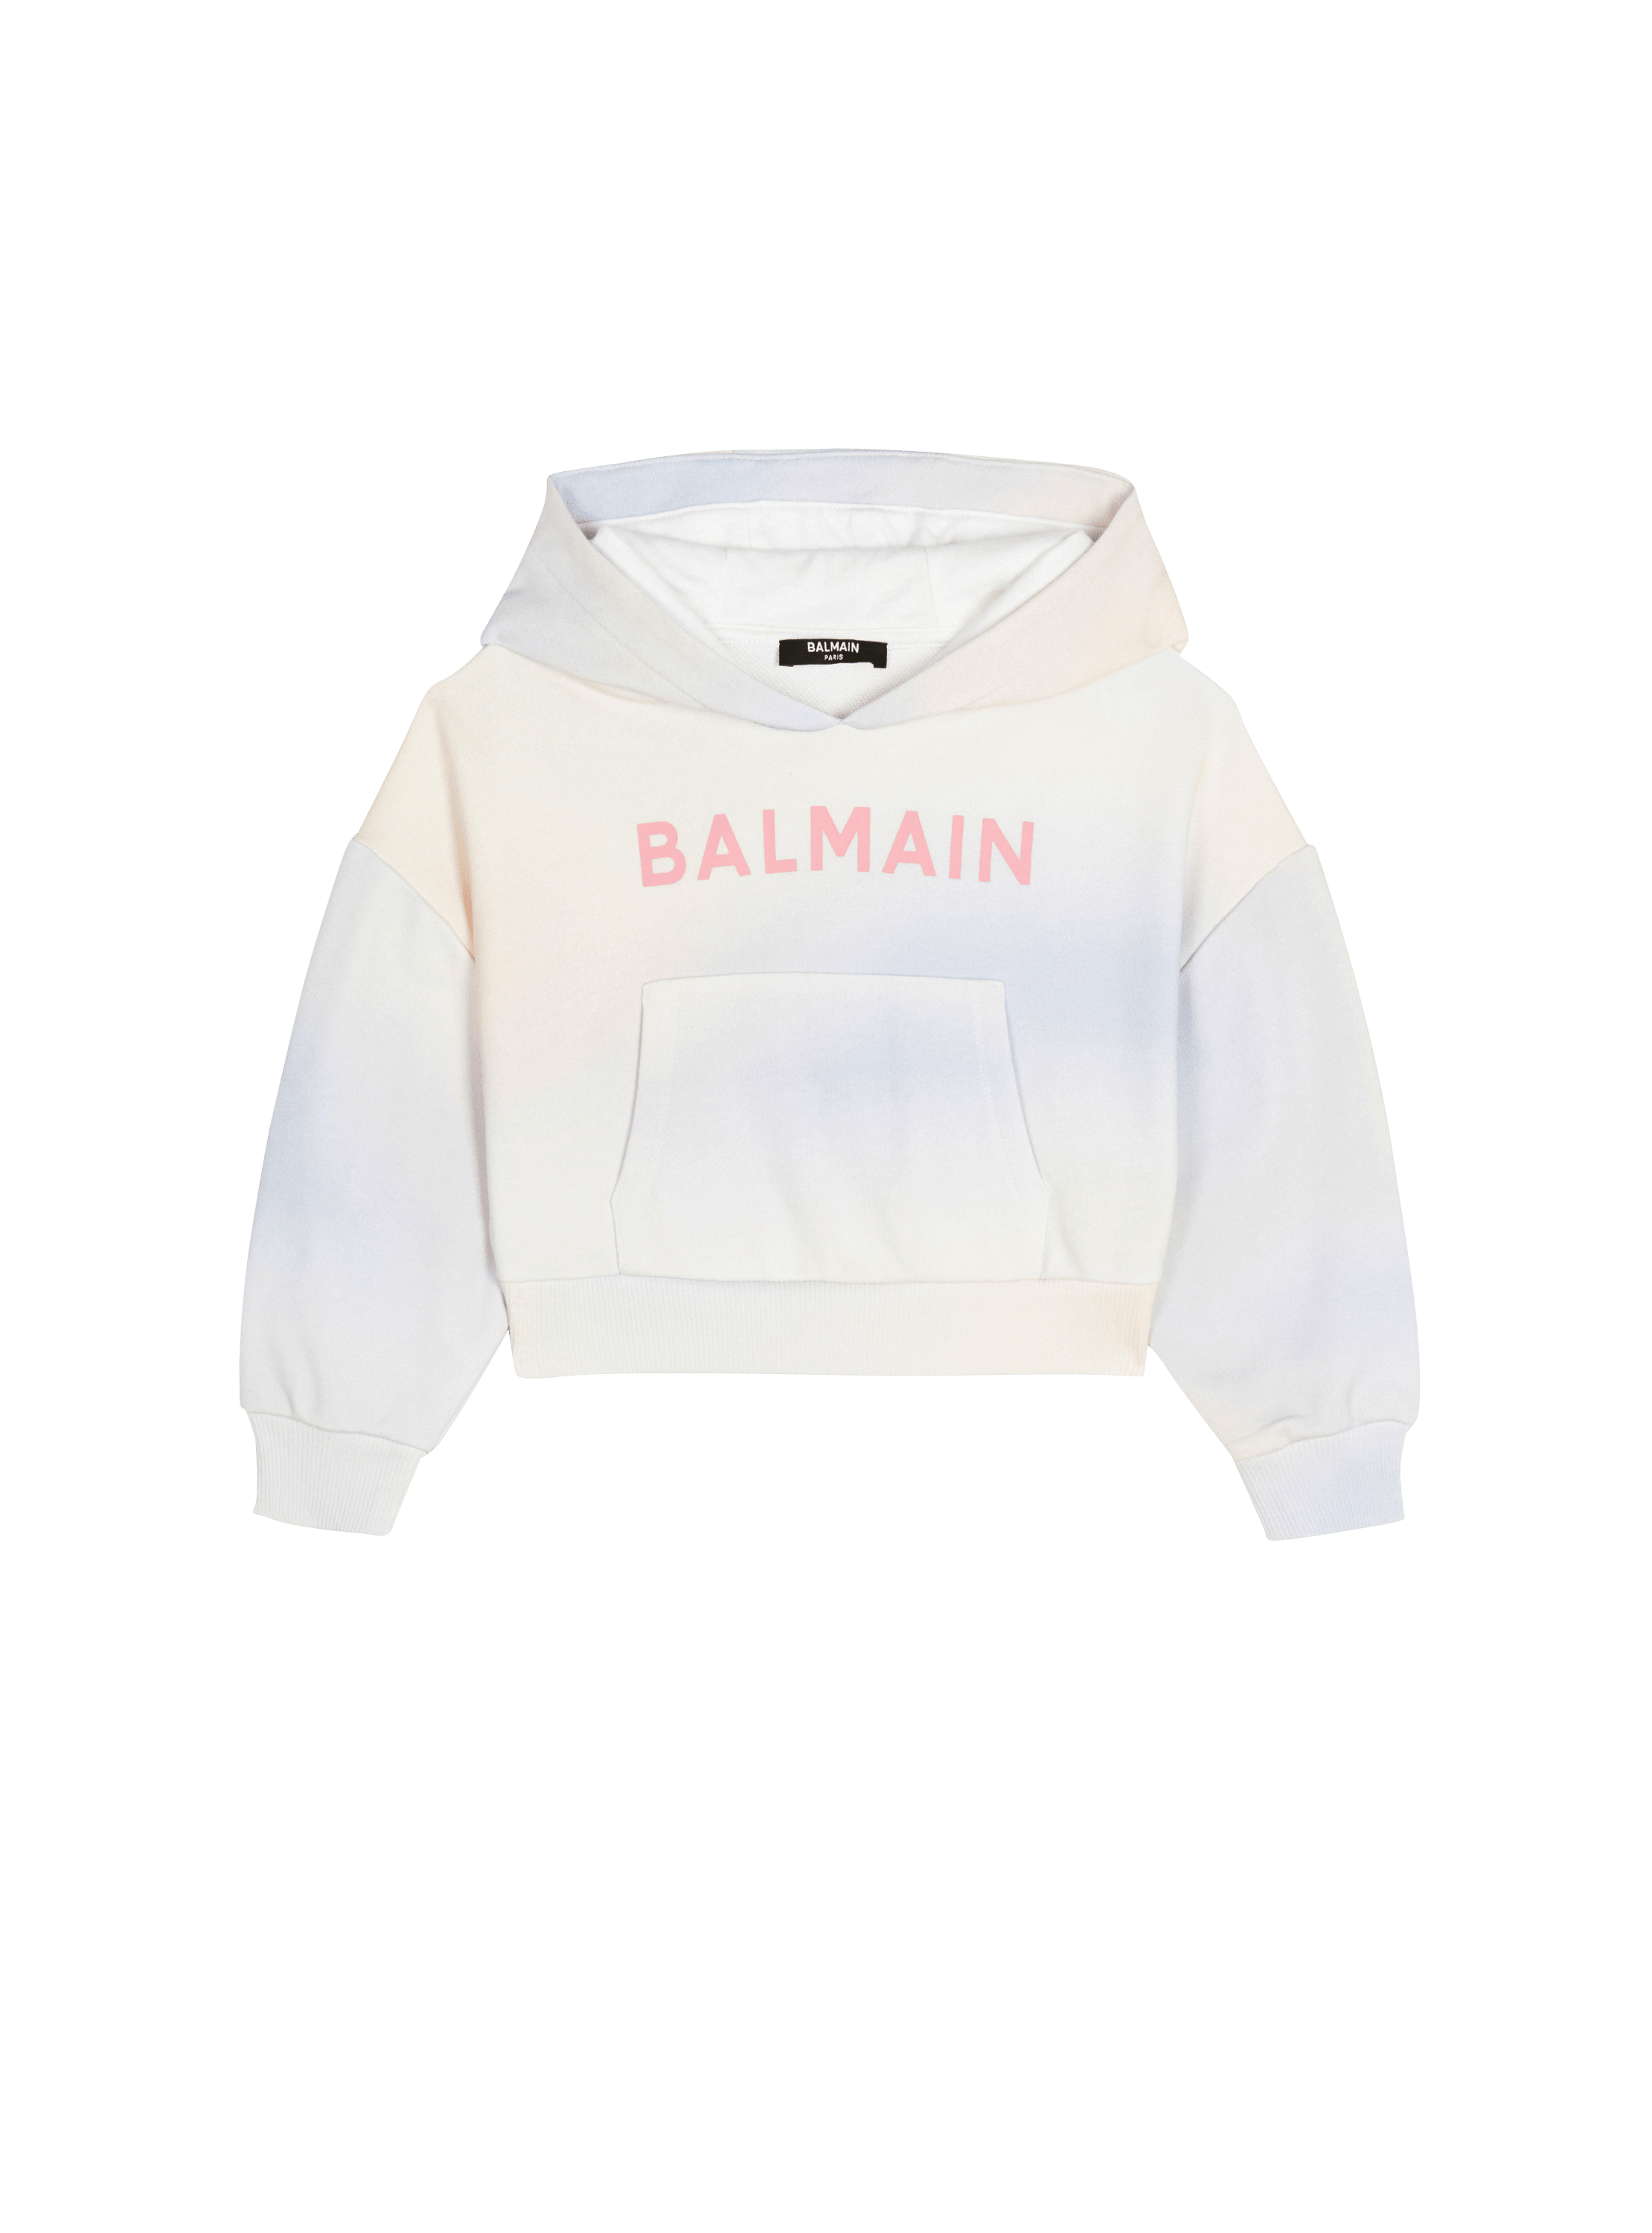 helgen Lignende Skur Cotton tie-dye hoodie with Balmain logo multicolor - Child | BALMAIN